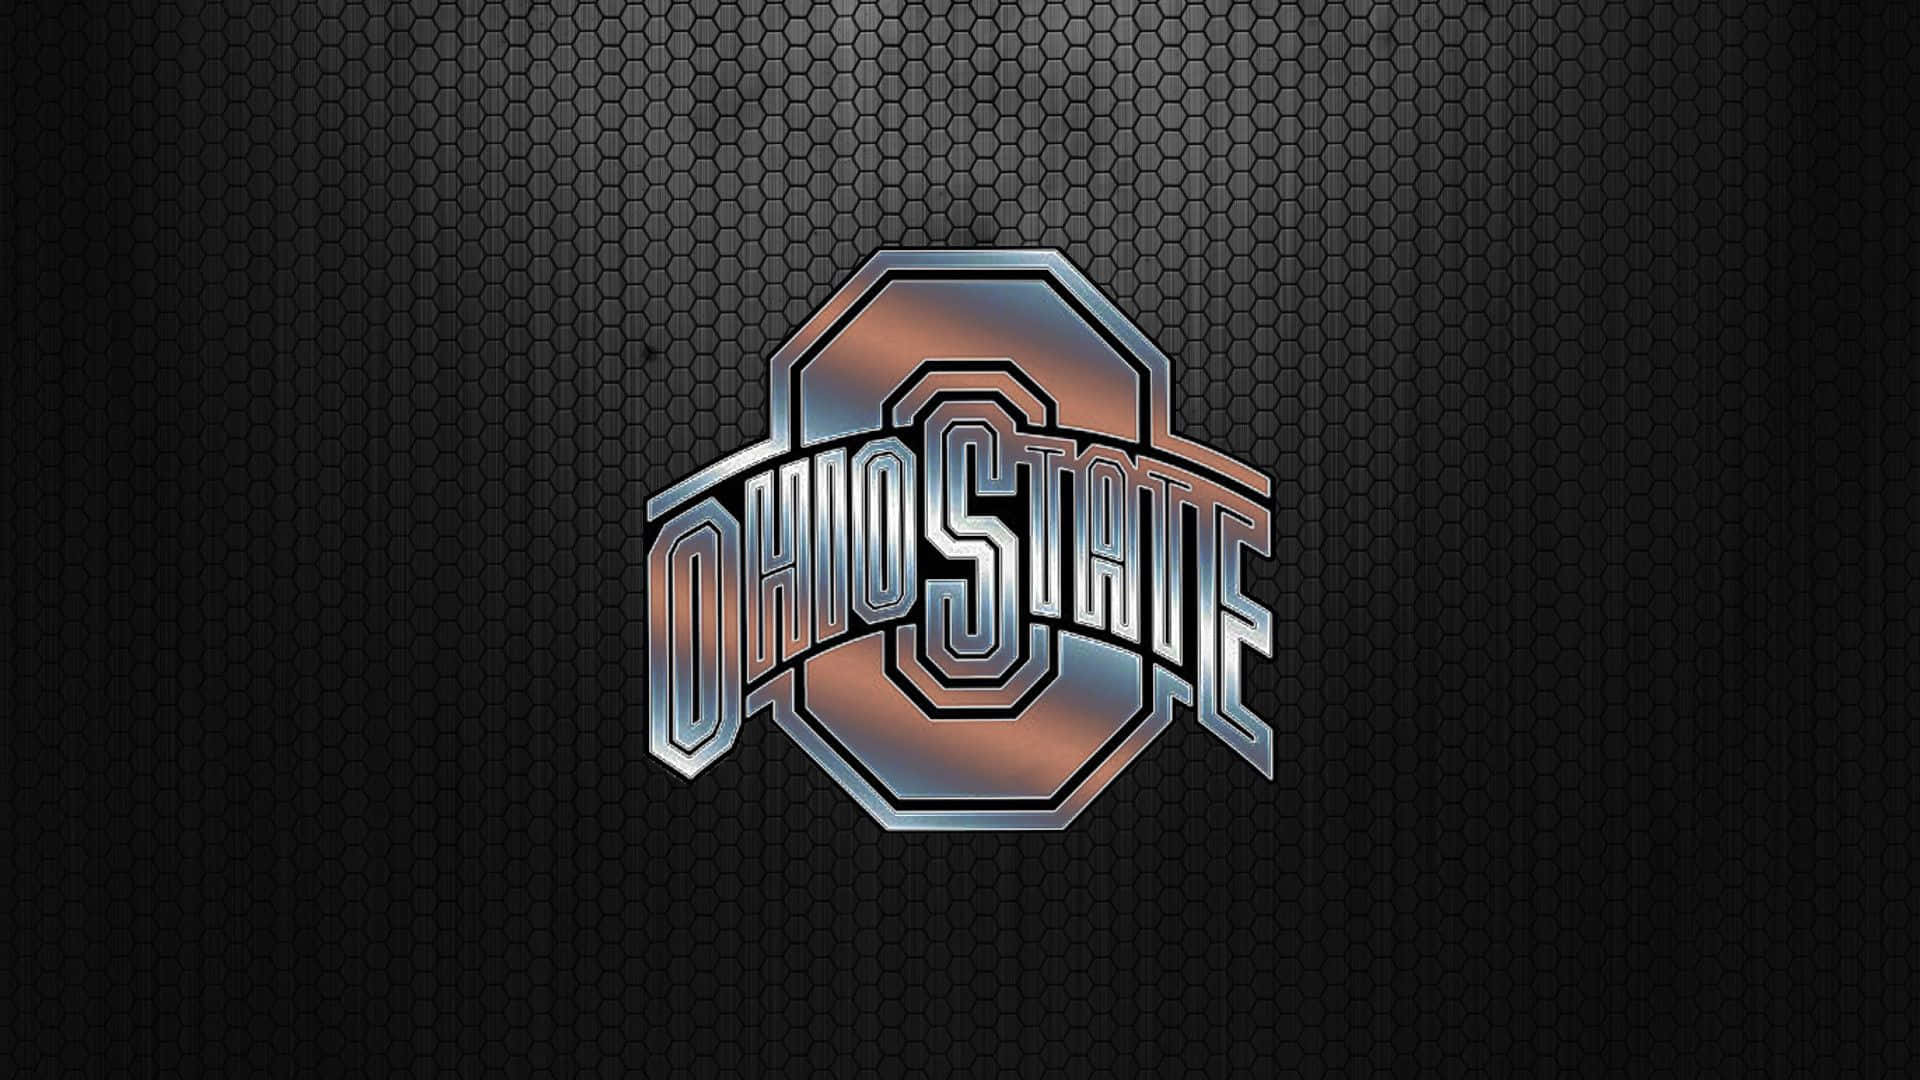 Stunning High-Resolution Wallpaper of Ohio State University Logo Wallpaper